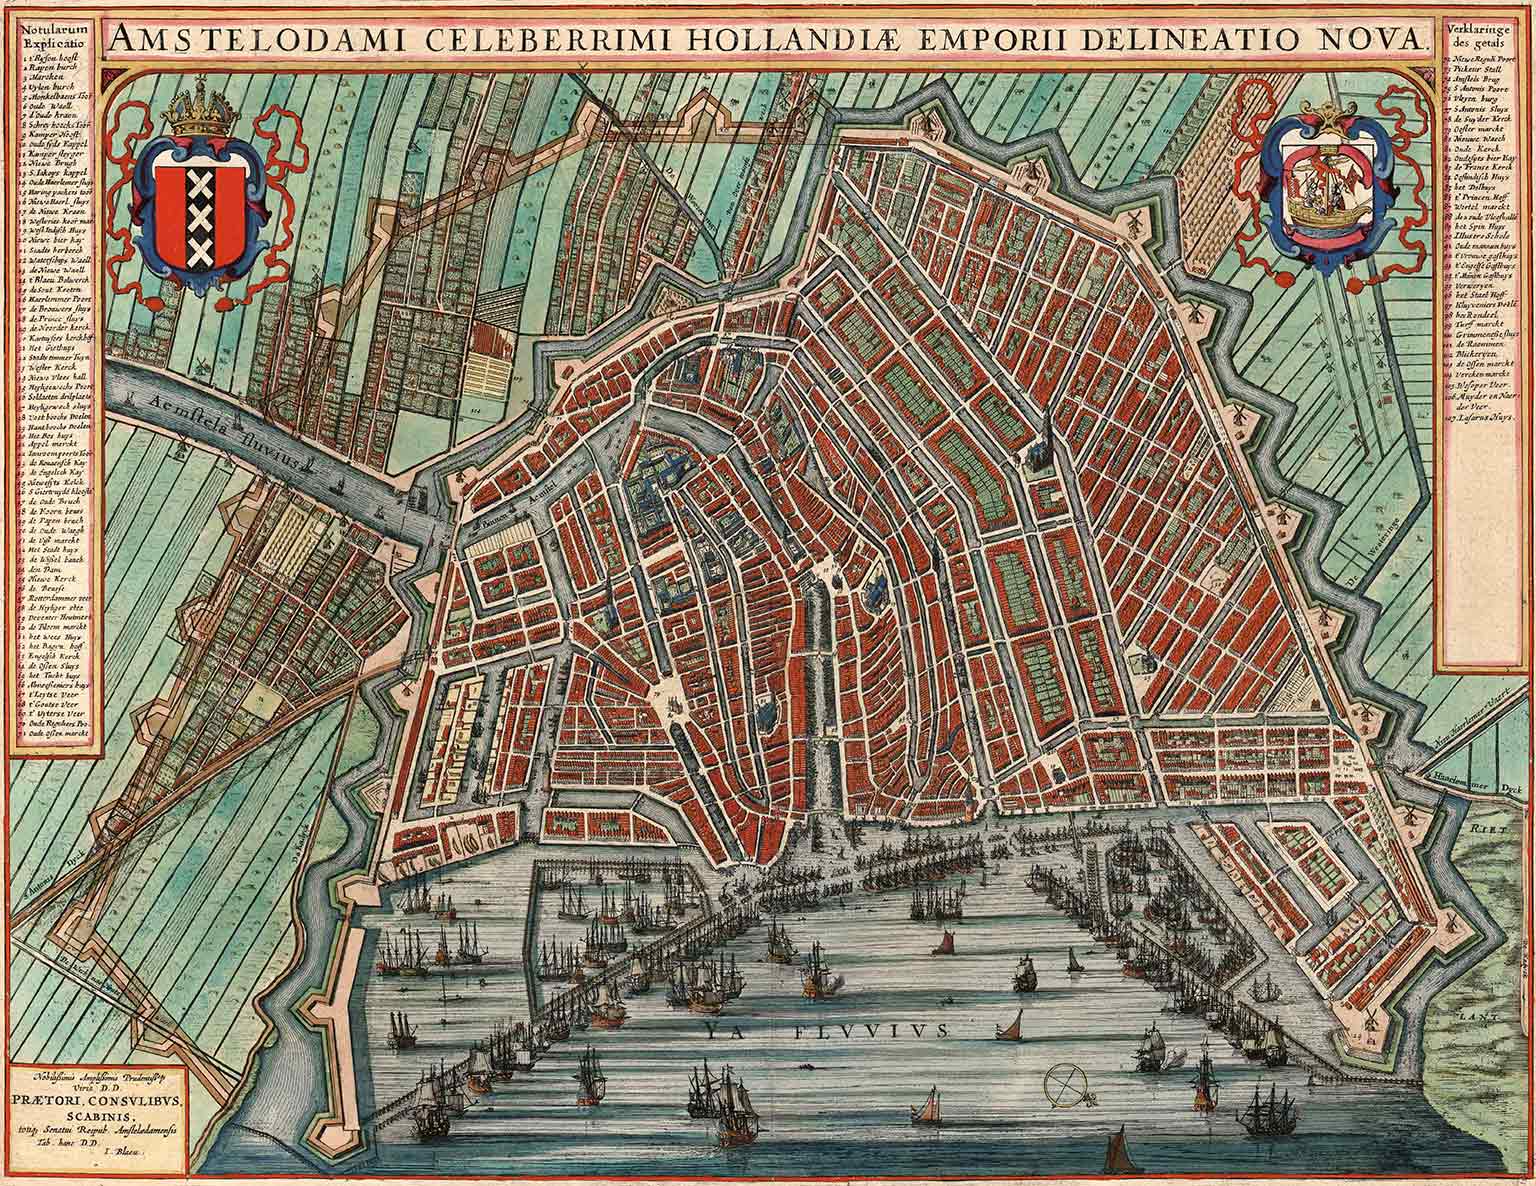 Kaart van Amsterdam uit 1649 van Johannes Blaeu